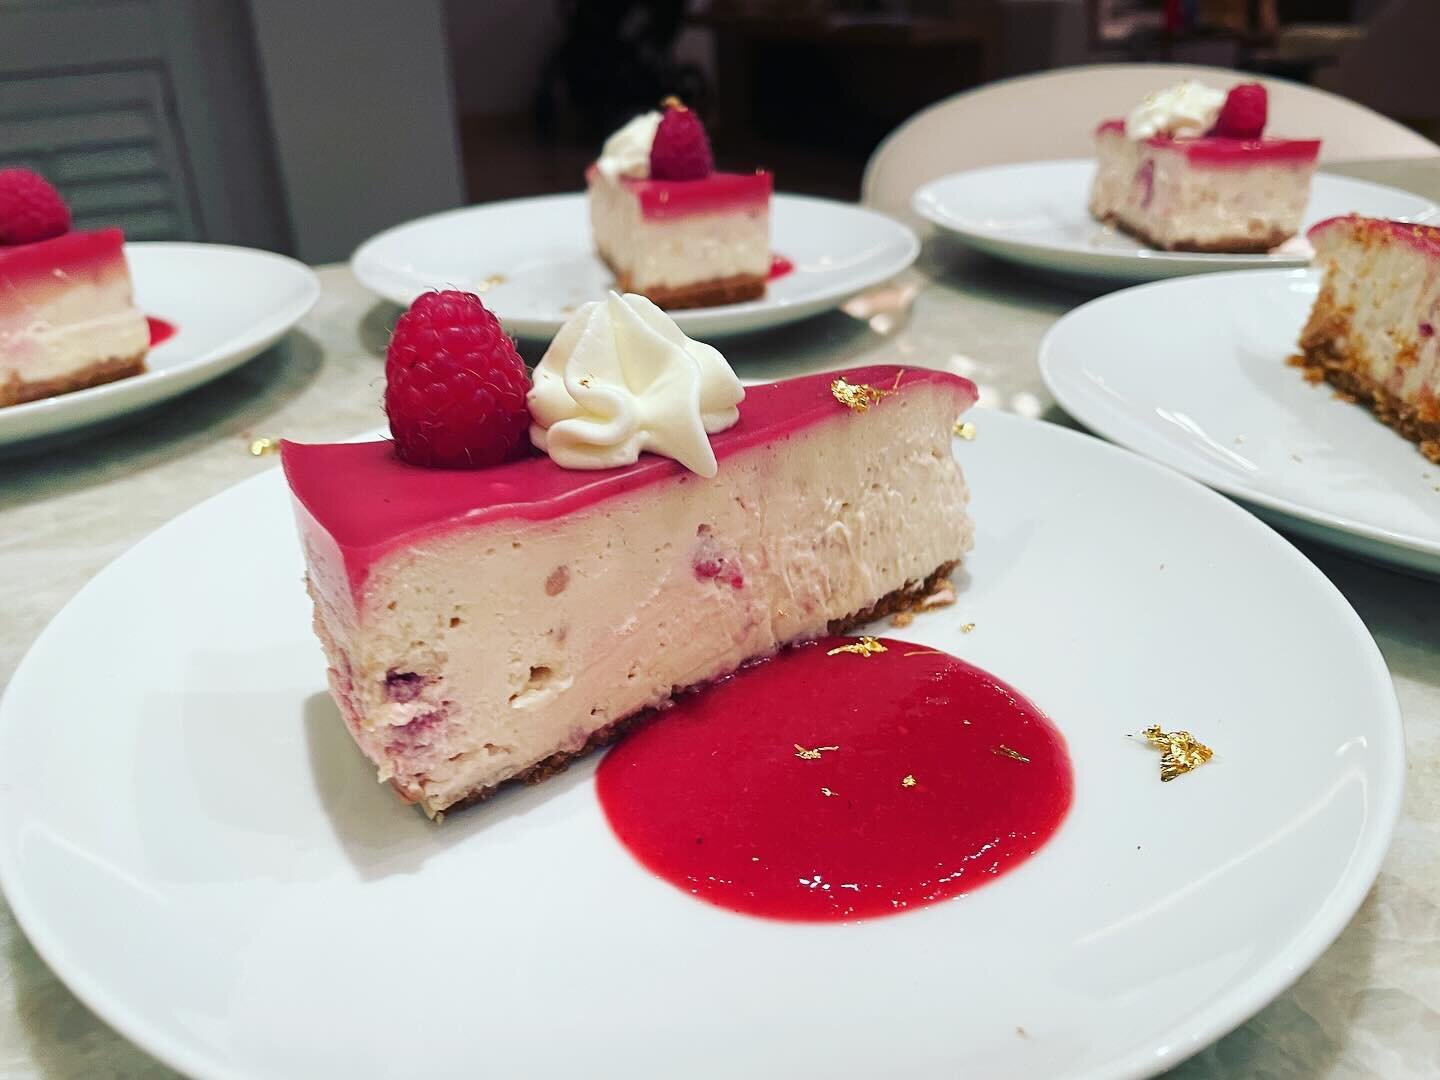 Raspberry Goat Cheese Cheesecake soooo good.
#dessert #goatchesse #cheesecake #throwback #instagood #cheflife #privatechef #mauihawaii #privatechefmaui #sweettreats